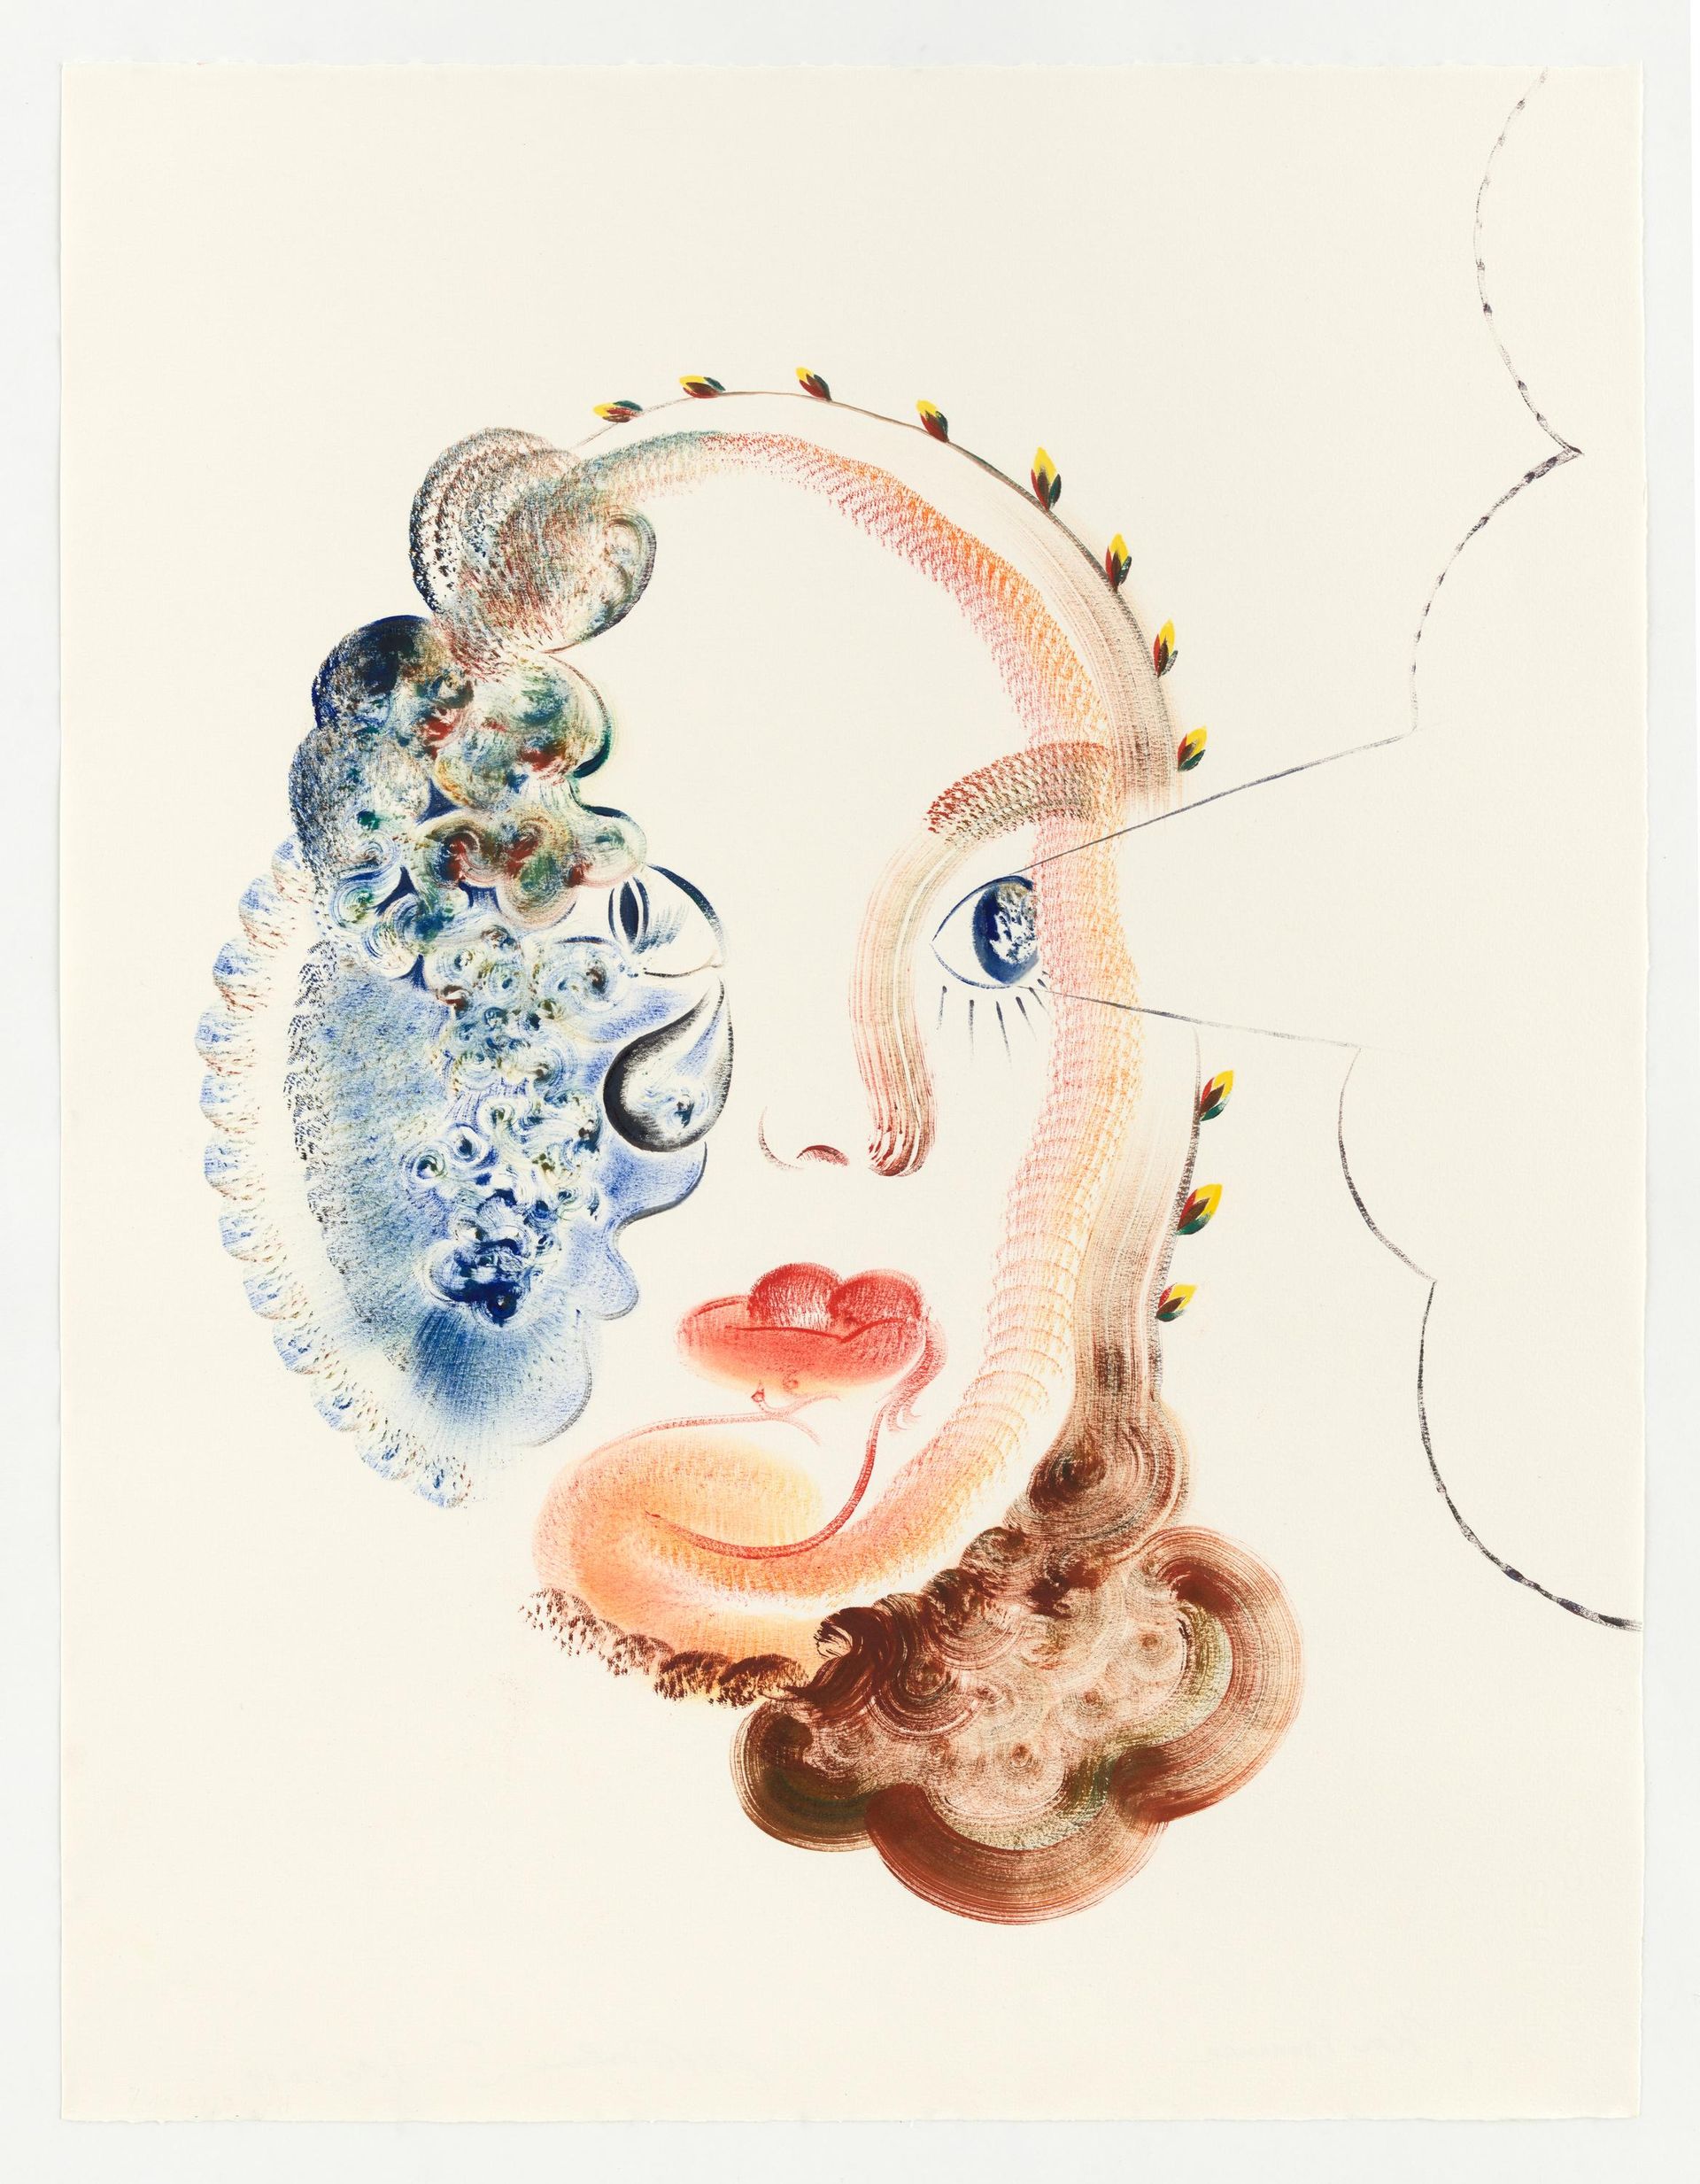 Veronika Holcová, Her Presence, 2019, Öl auf Papier, 65 x 50 cm, Courtesy Monika Schnetkamp Collection, Foto: Eric Tschernow